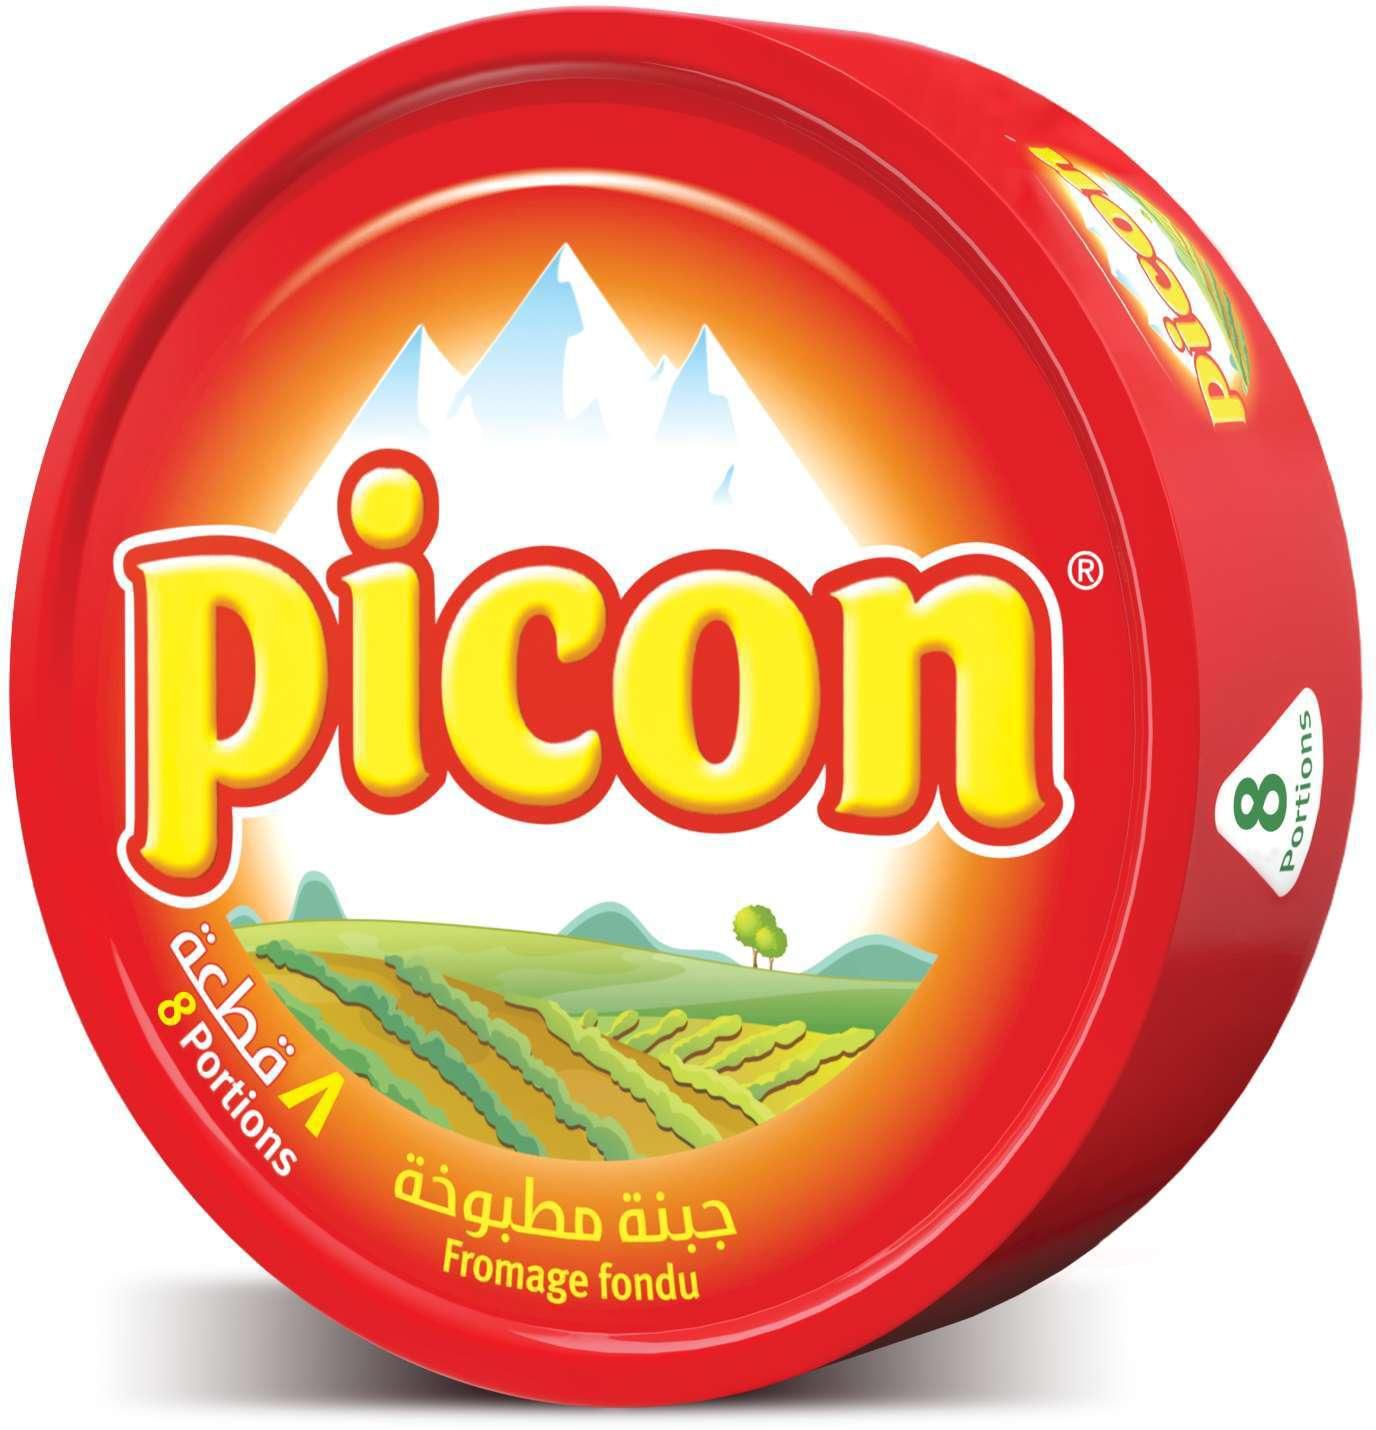 Regal Picon Cheese 8 Portion 120g